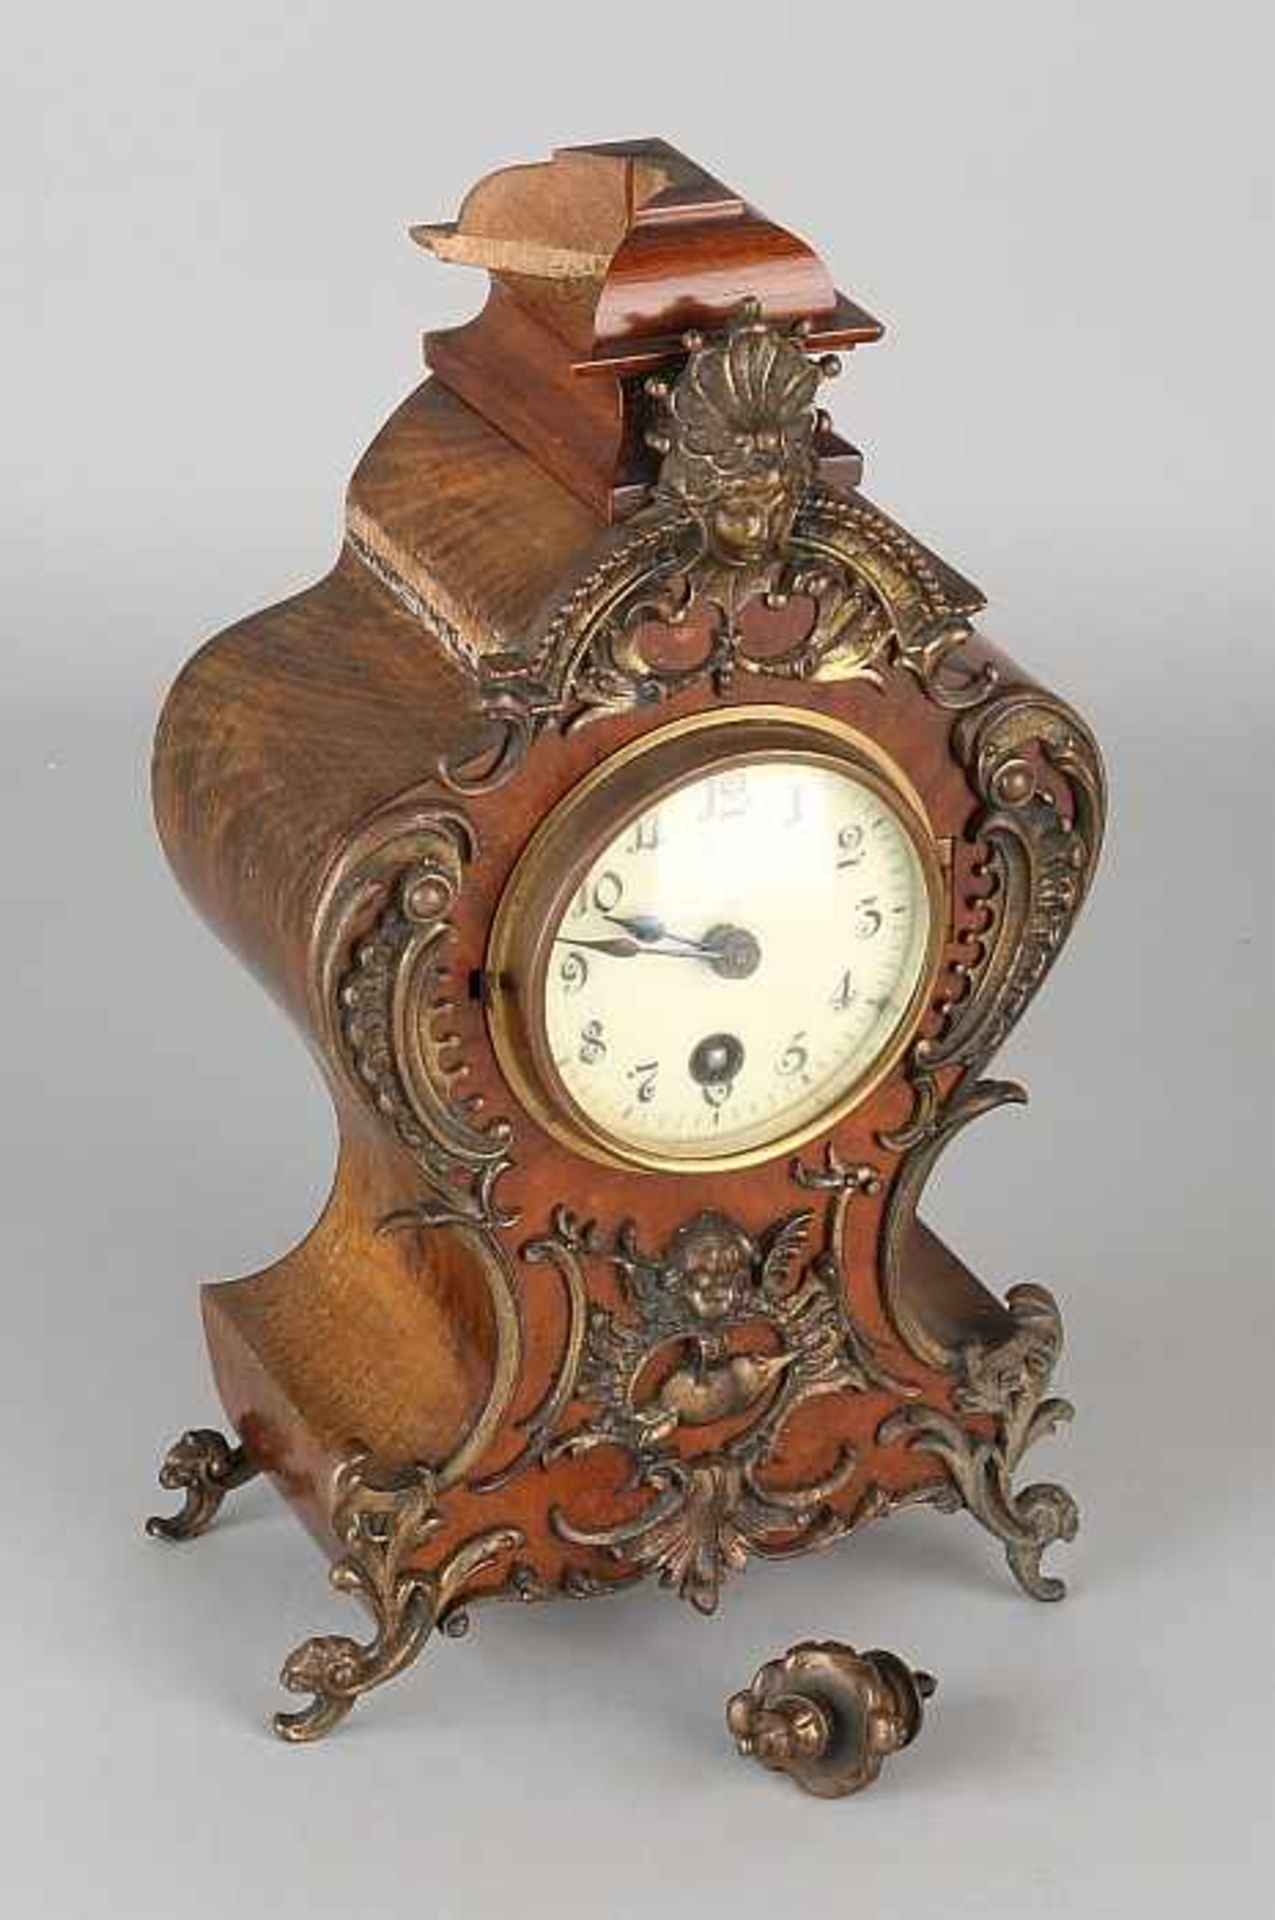 German antique walnut Lenzkirch clock with bronze fittings, silent movement. Circa 1890. Pieces list